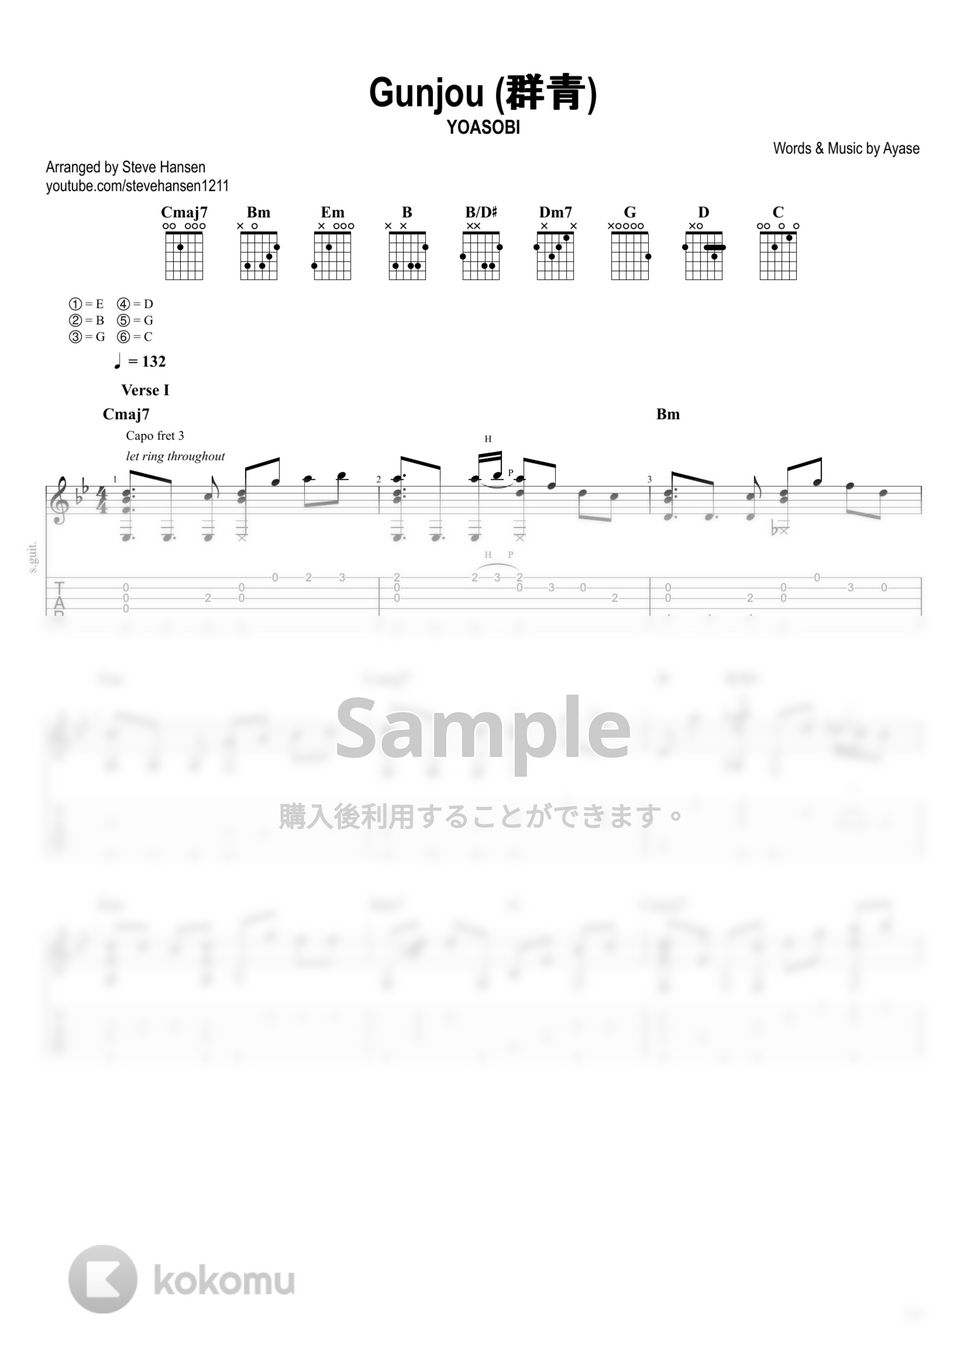 YOASOBI - 群青 (ソロギター) by Steve Hansen